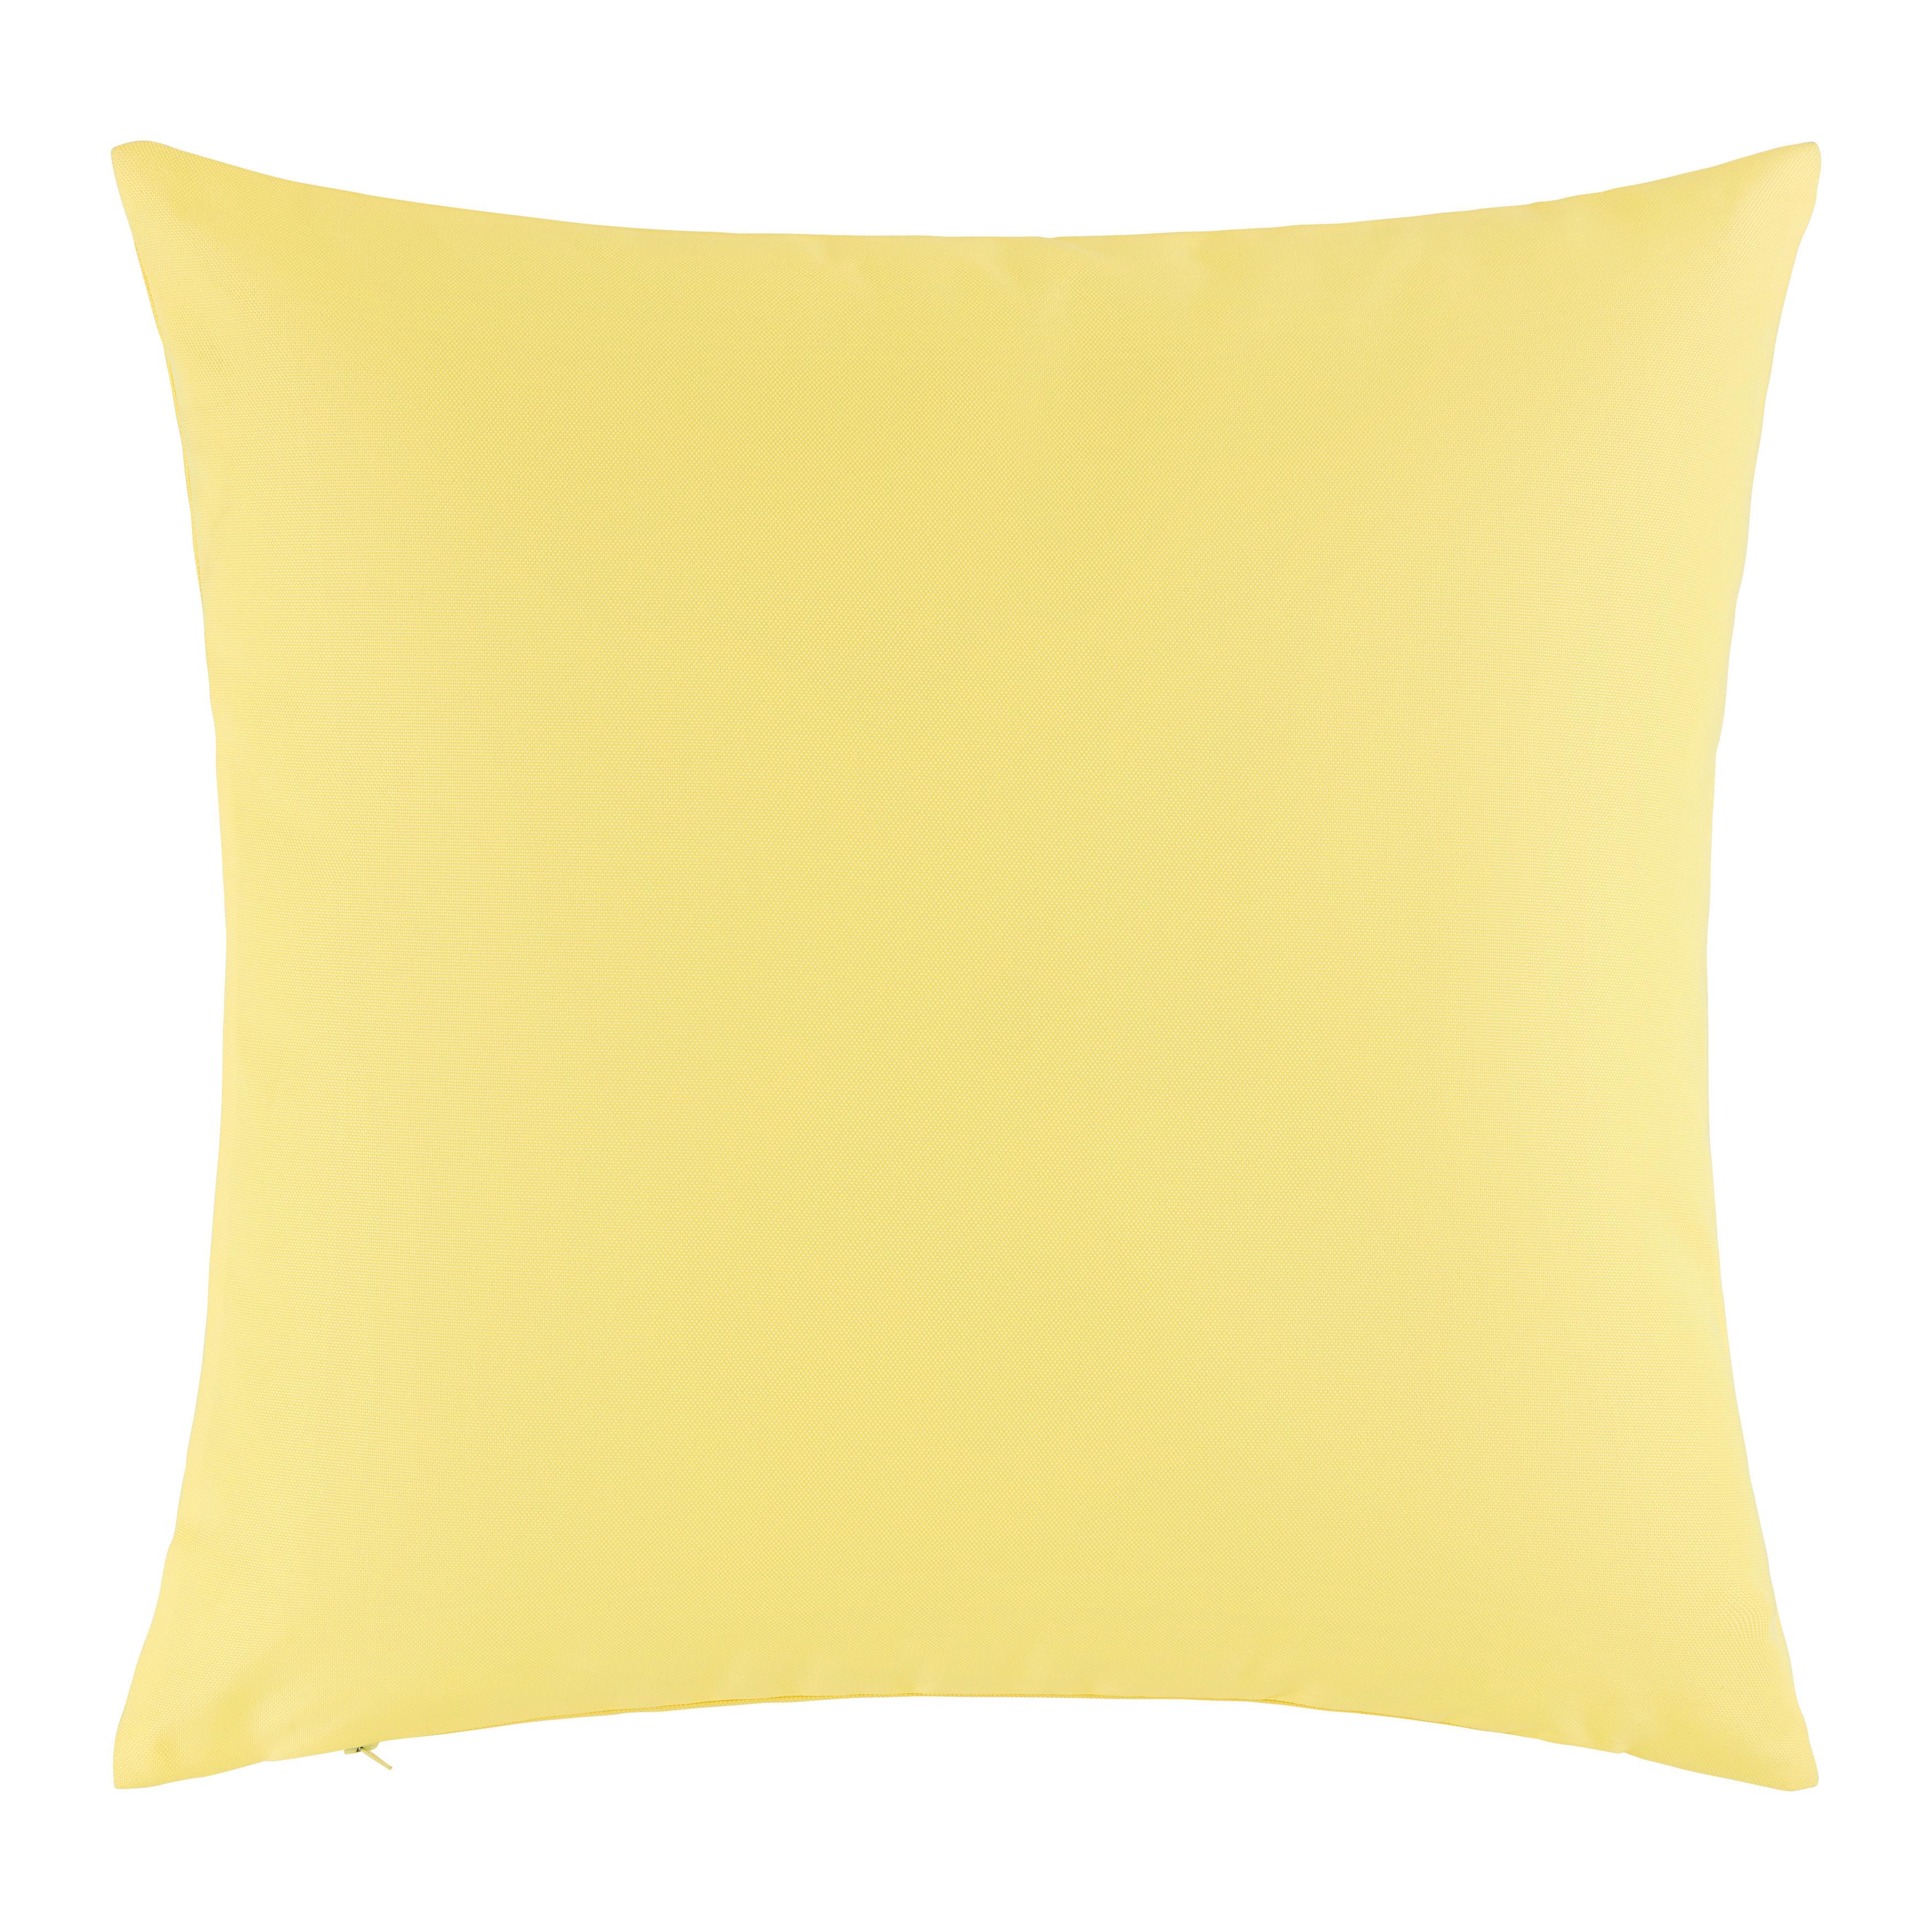 Venkovní Polštář Dodo, 45/45cm, Žlutá - žlutá, Konvenční, textil (45/45cm) - Modern Living